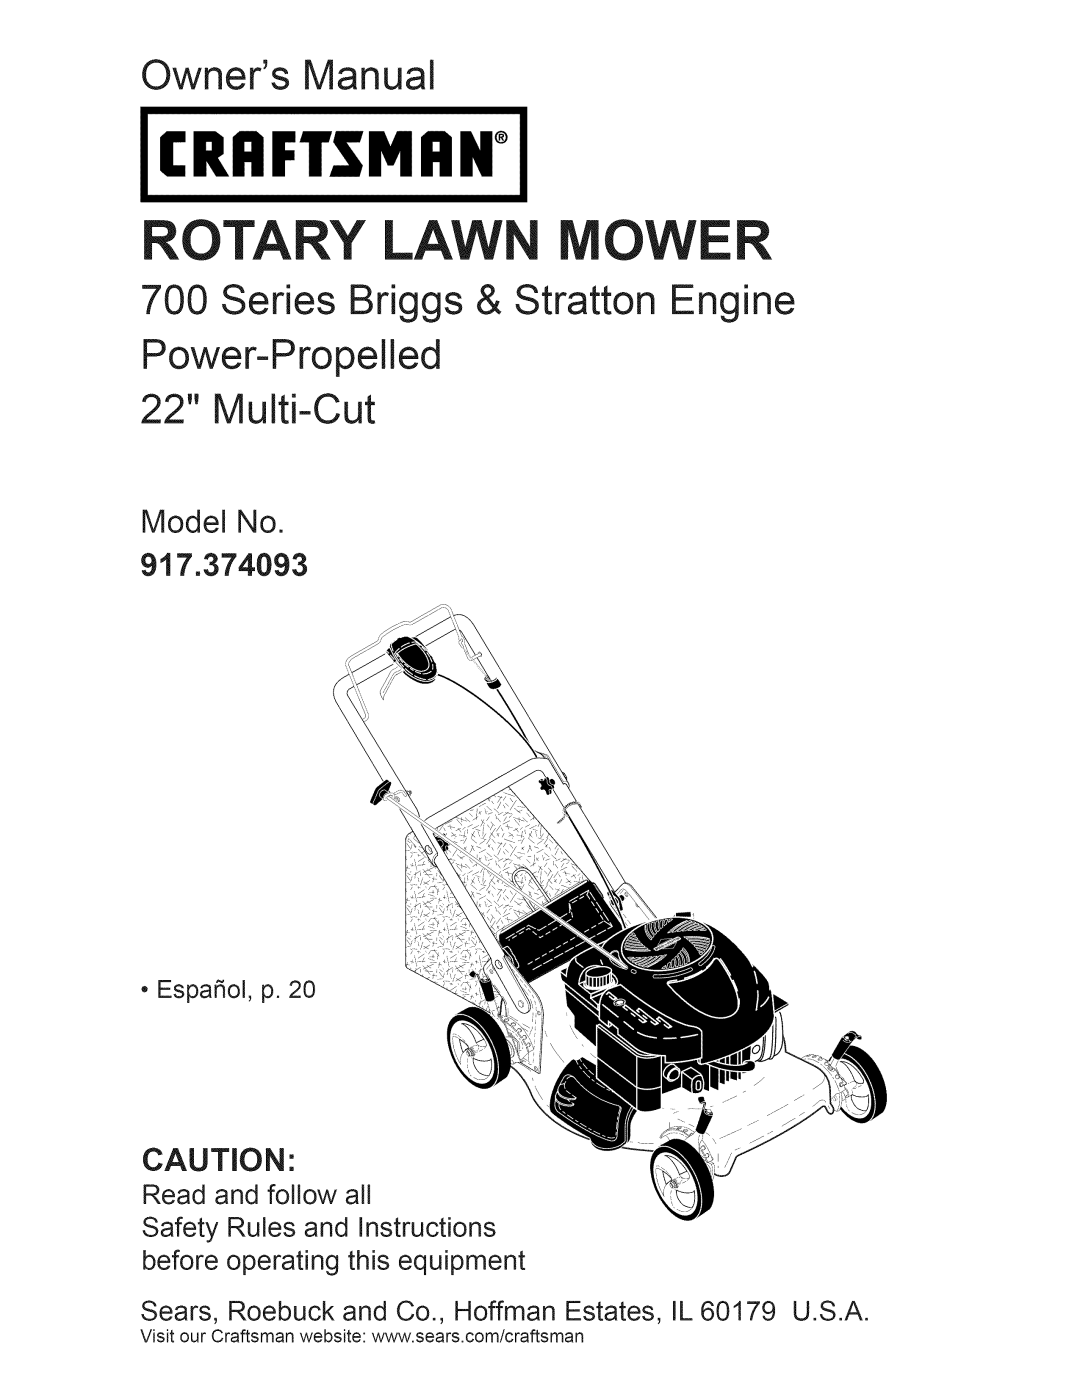 Craftsman owner manual Model No 917.374093, Craftsman, Rotary Lawn Mower, Owners Manual, Power-Propelled 22 Multi-Cut 